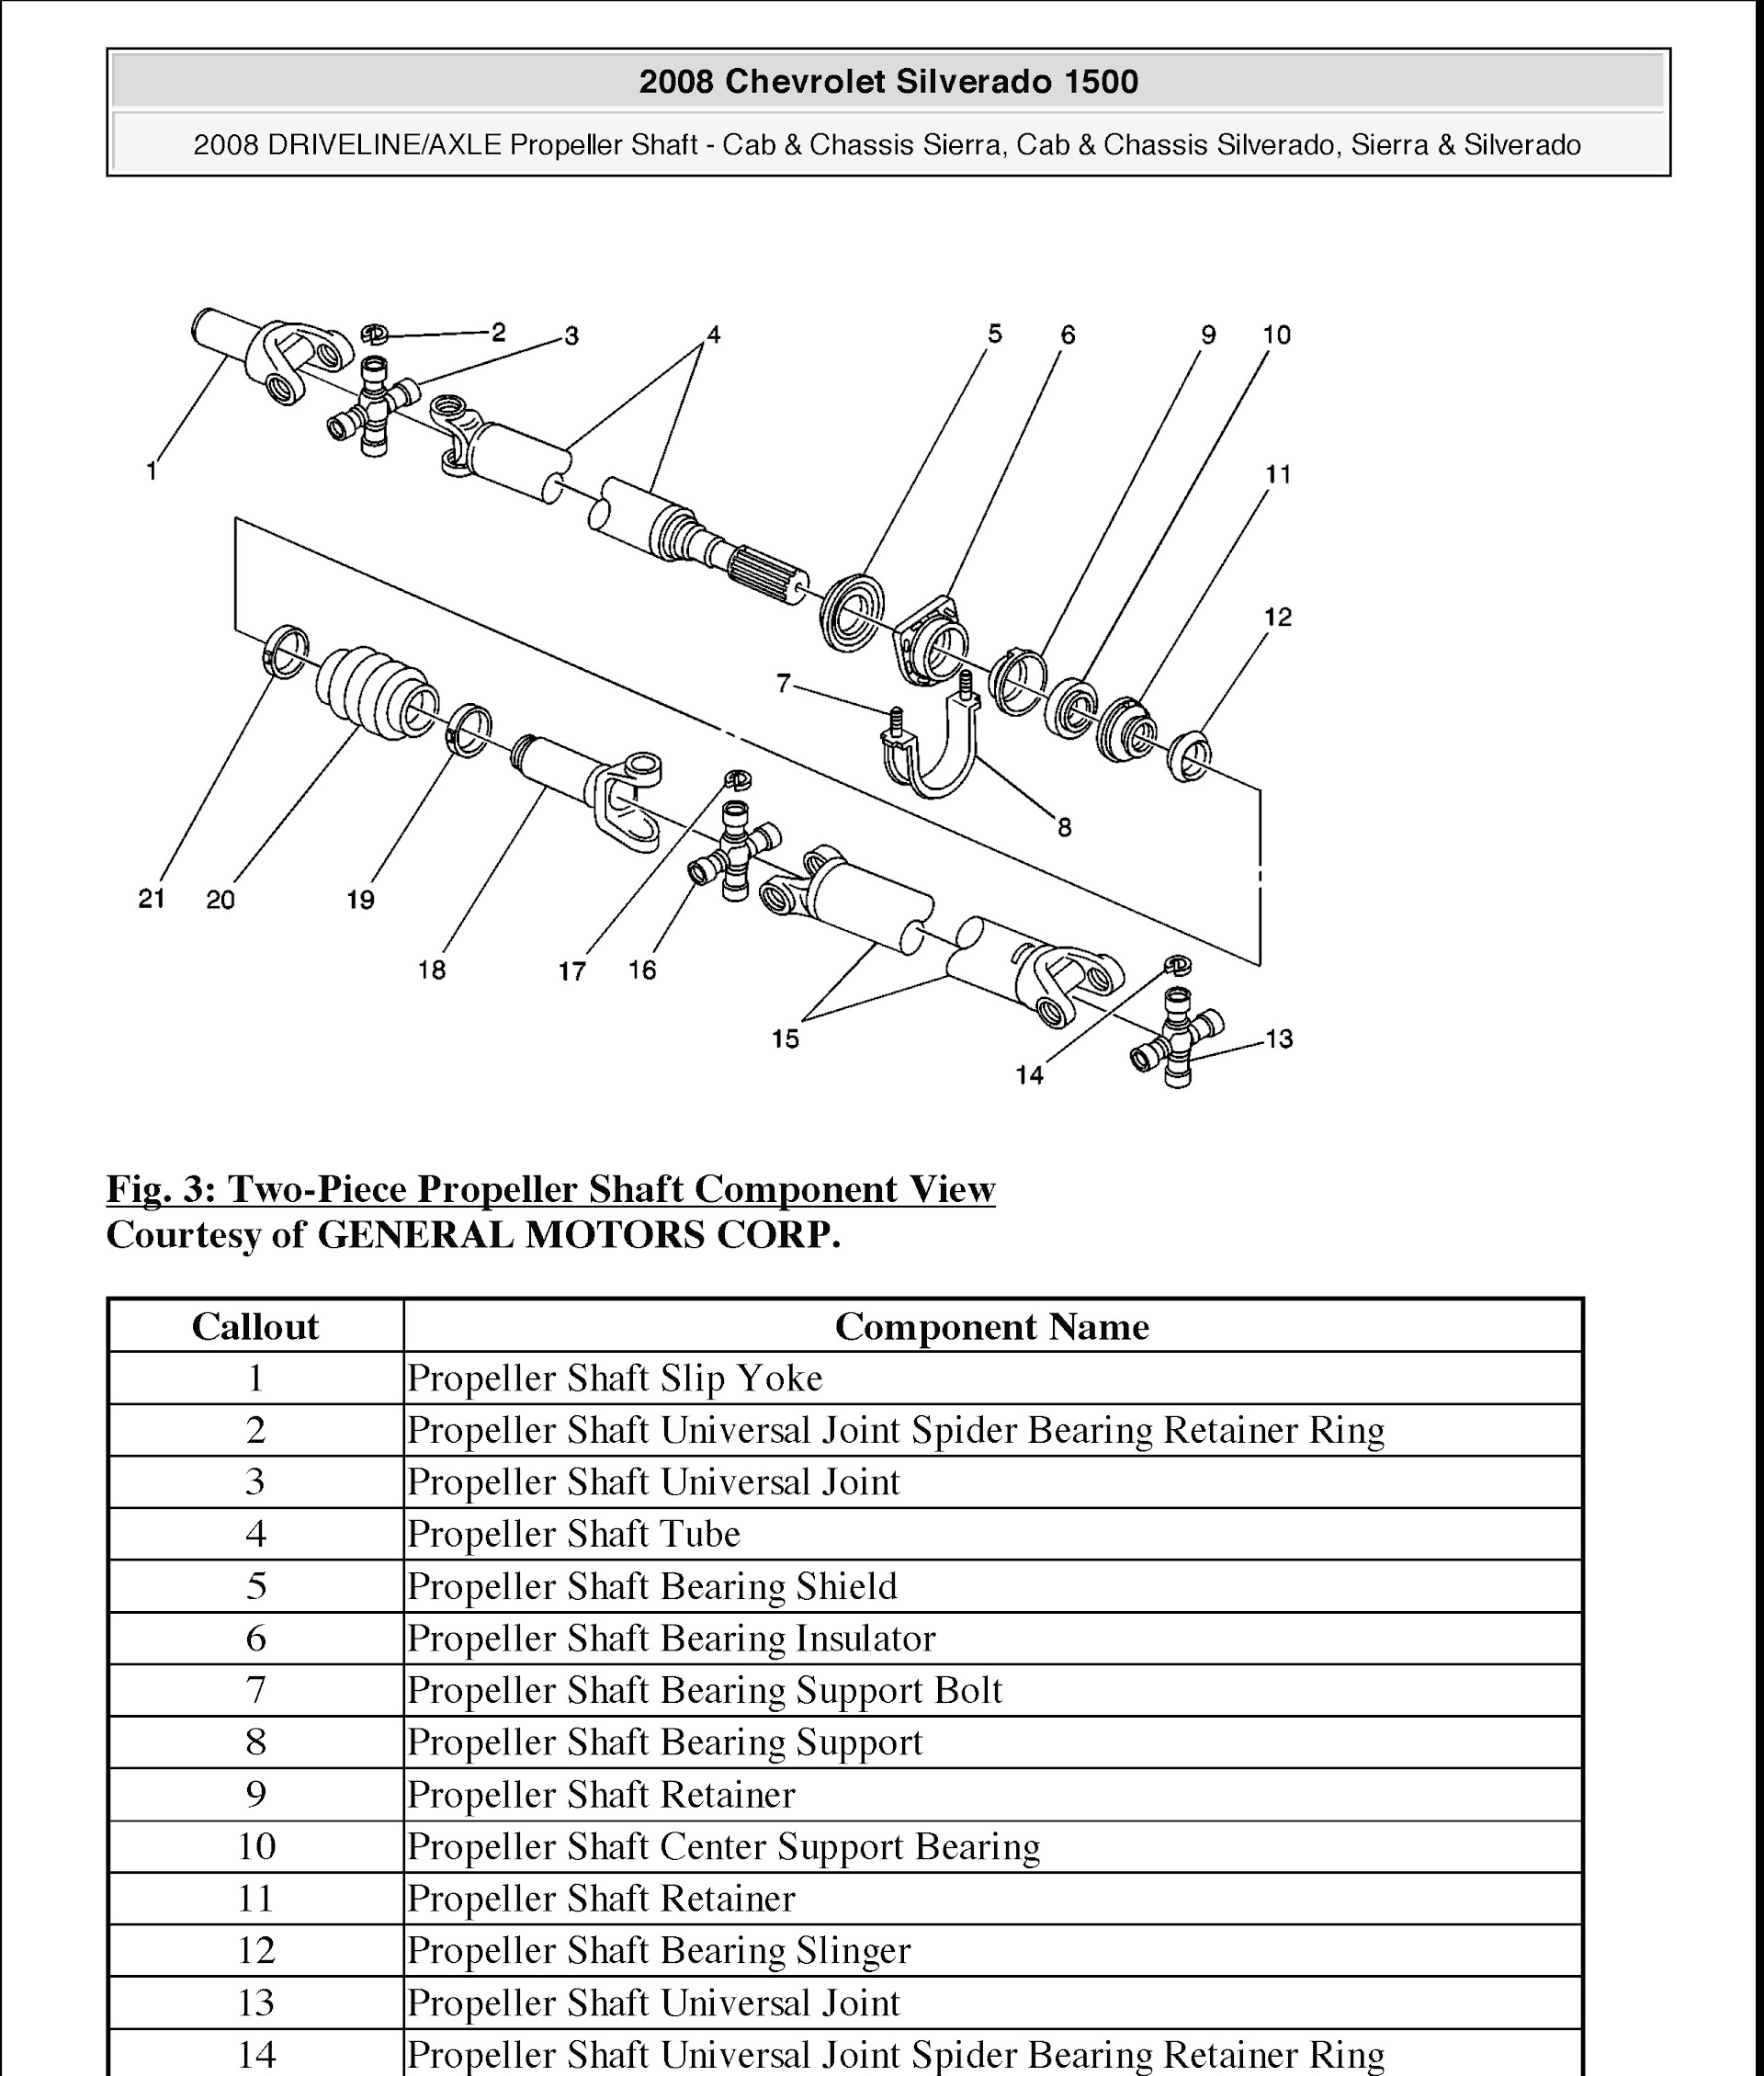 Chevrolet Silverado 1500 Repair Manual, Driveline and Axle